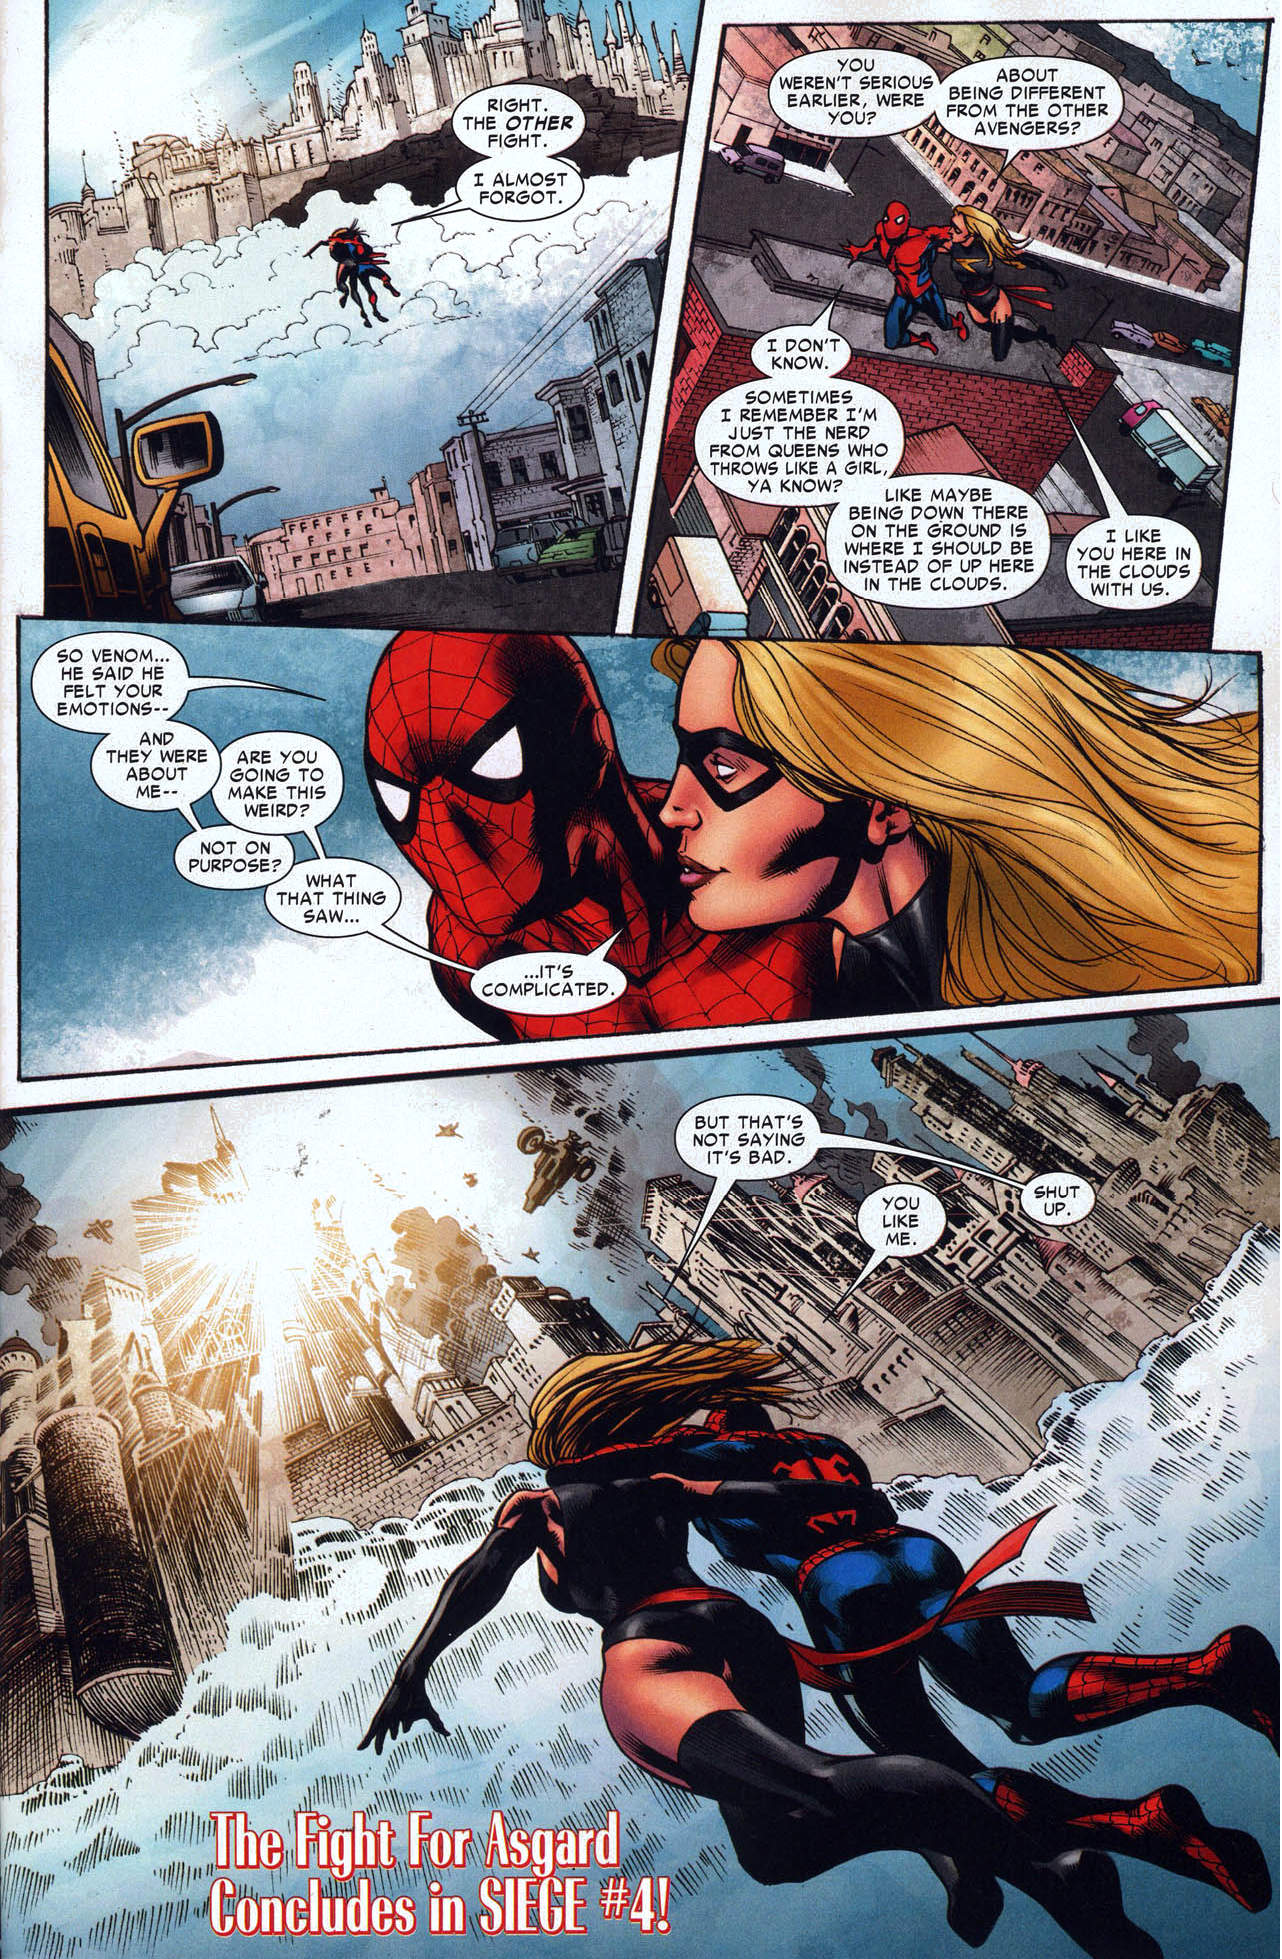 miss marvel likes spider-man